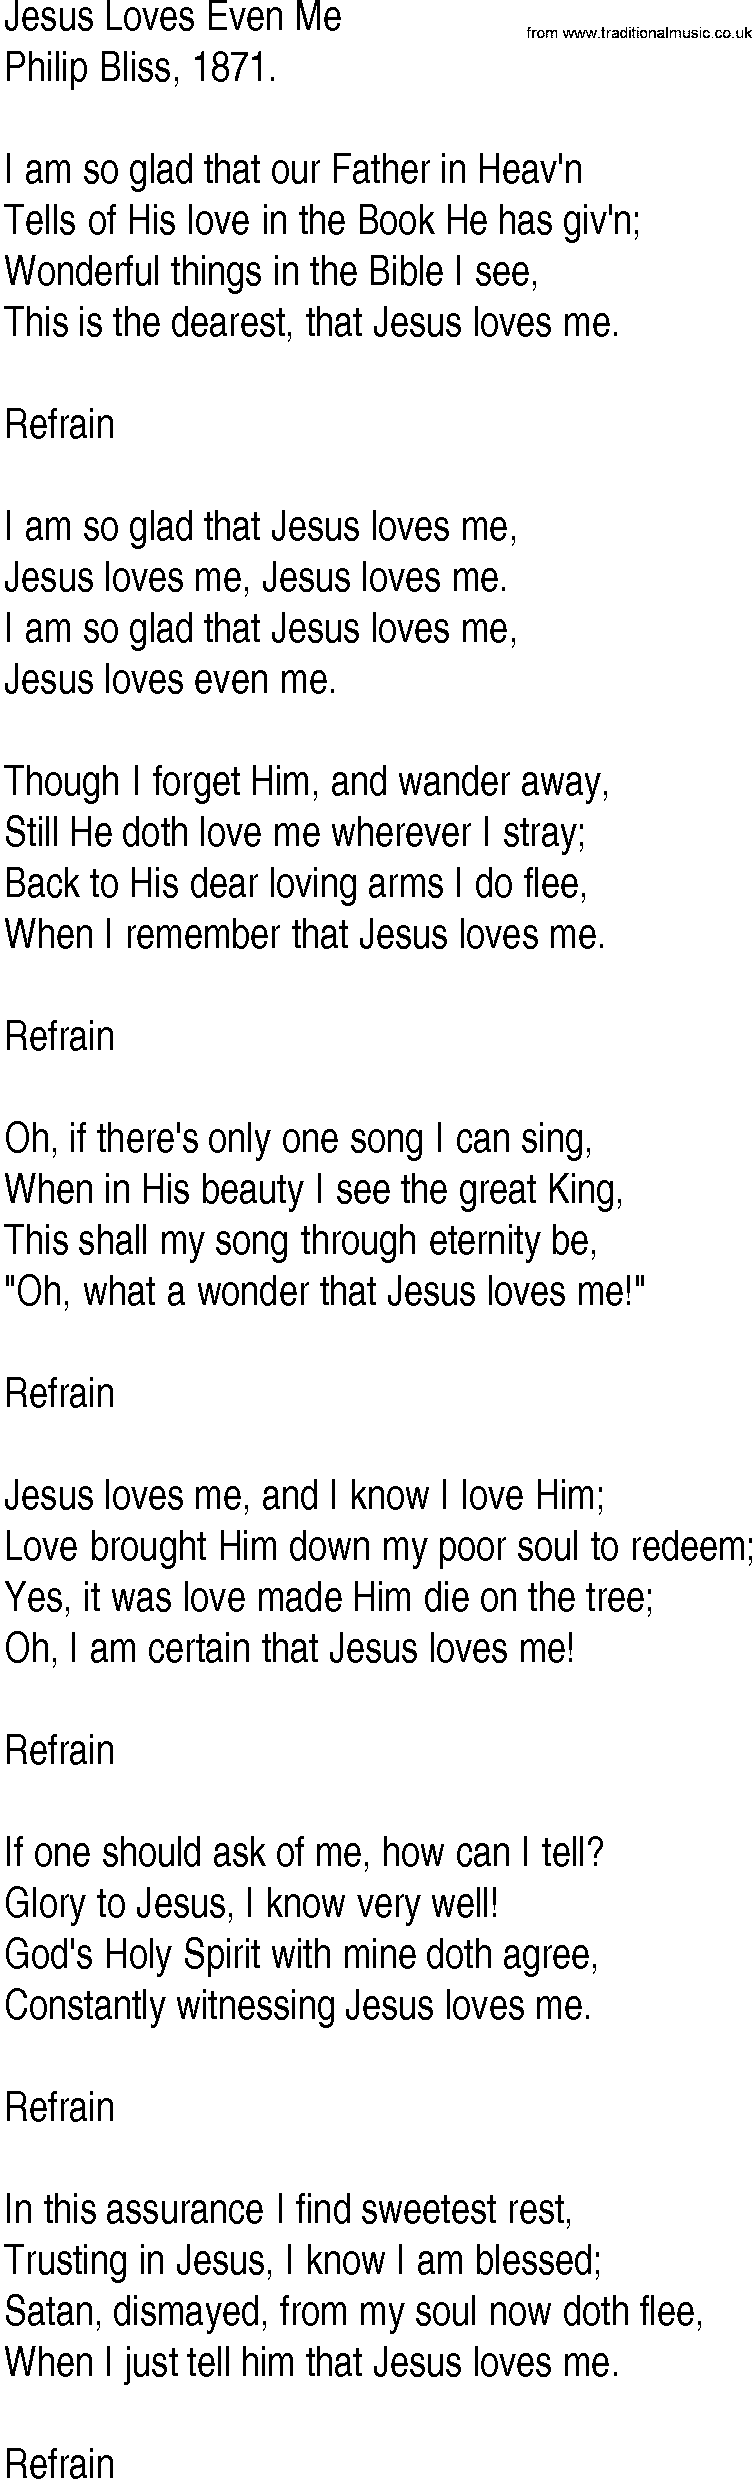 Hymn and Gospel Song: Jesus Loves Even Me by Philip Bliss lyrics